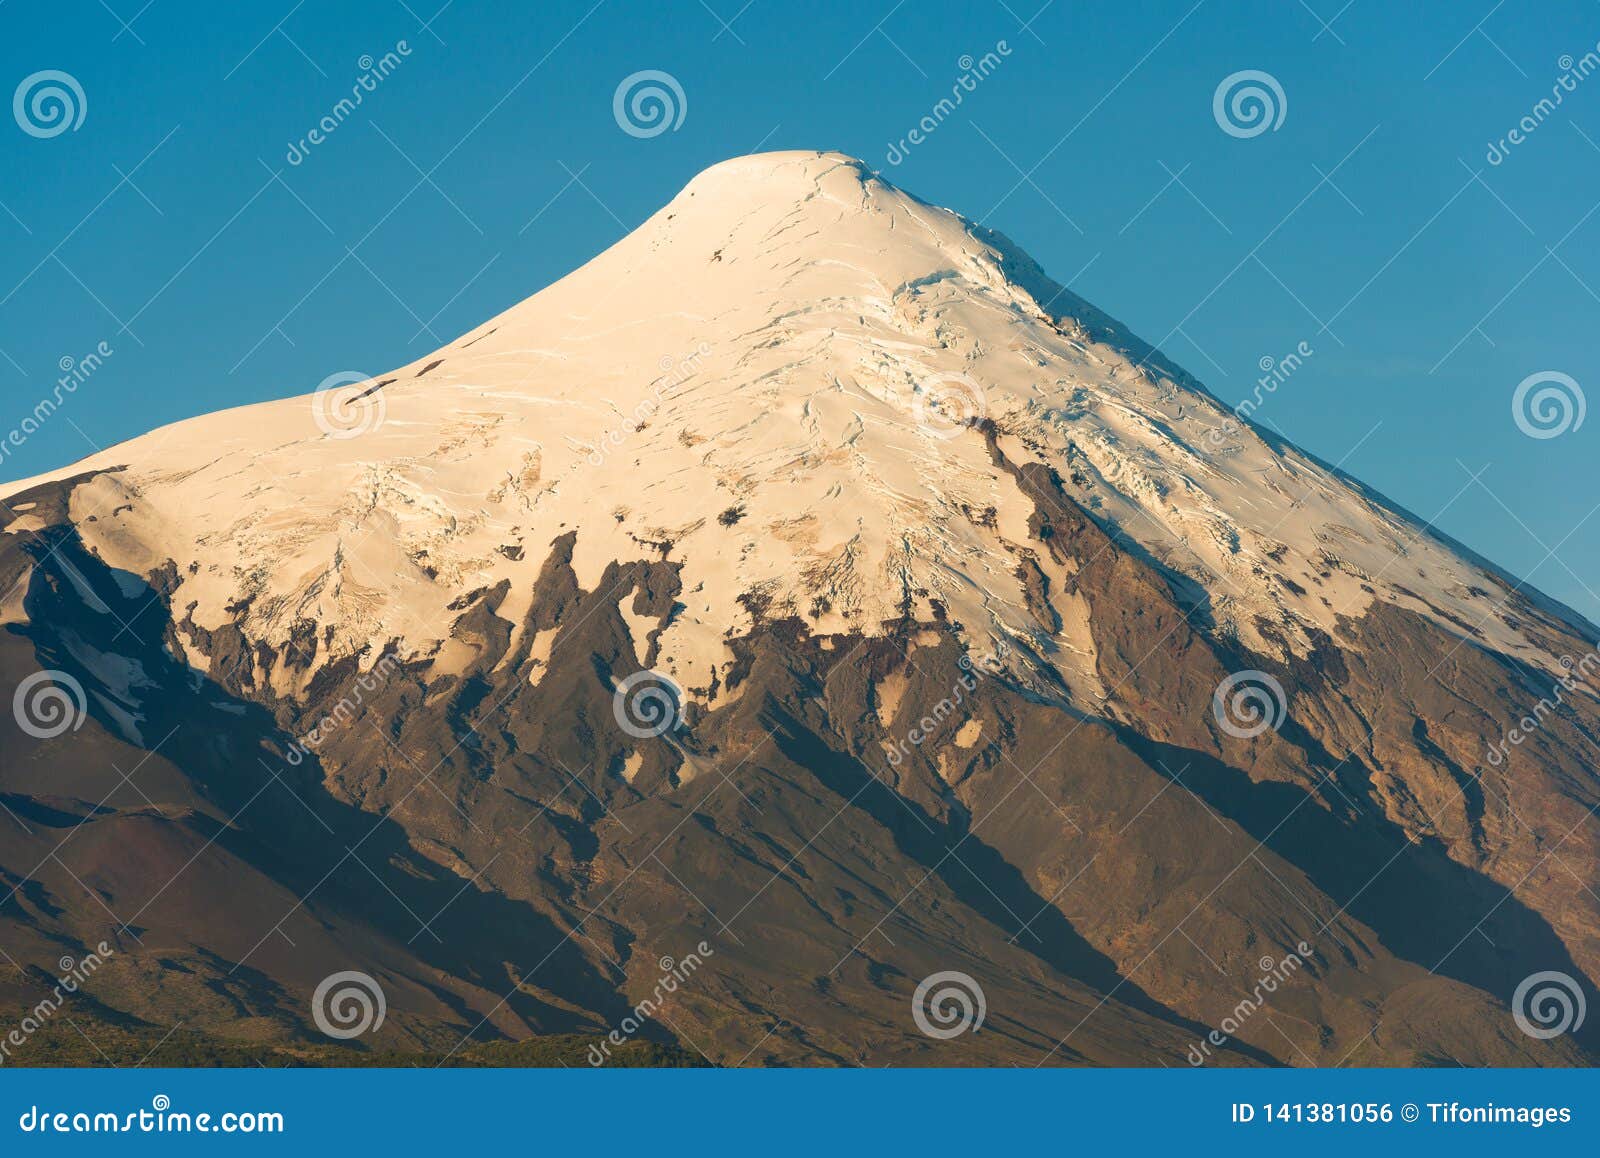 glaciers at the summit of osorno volcano